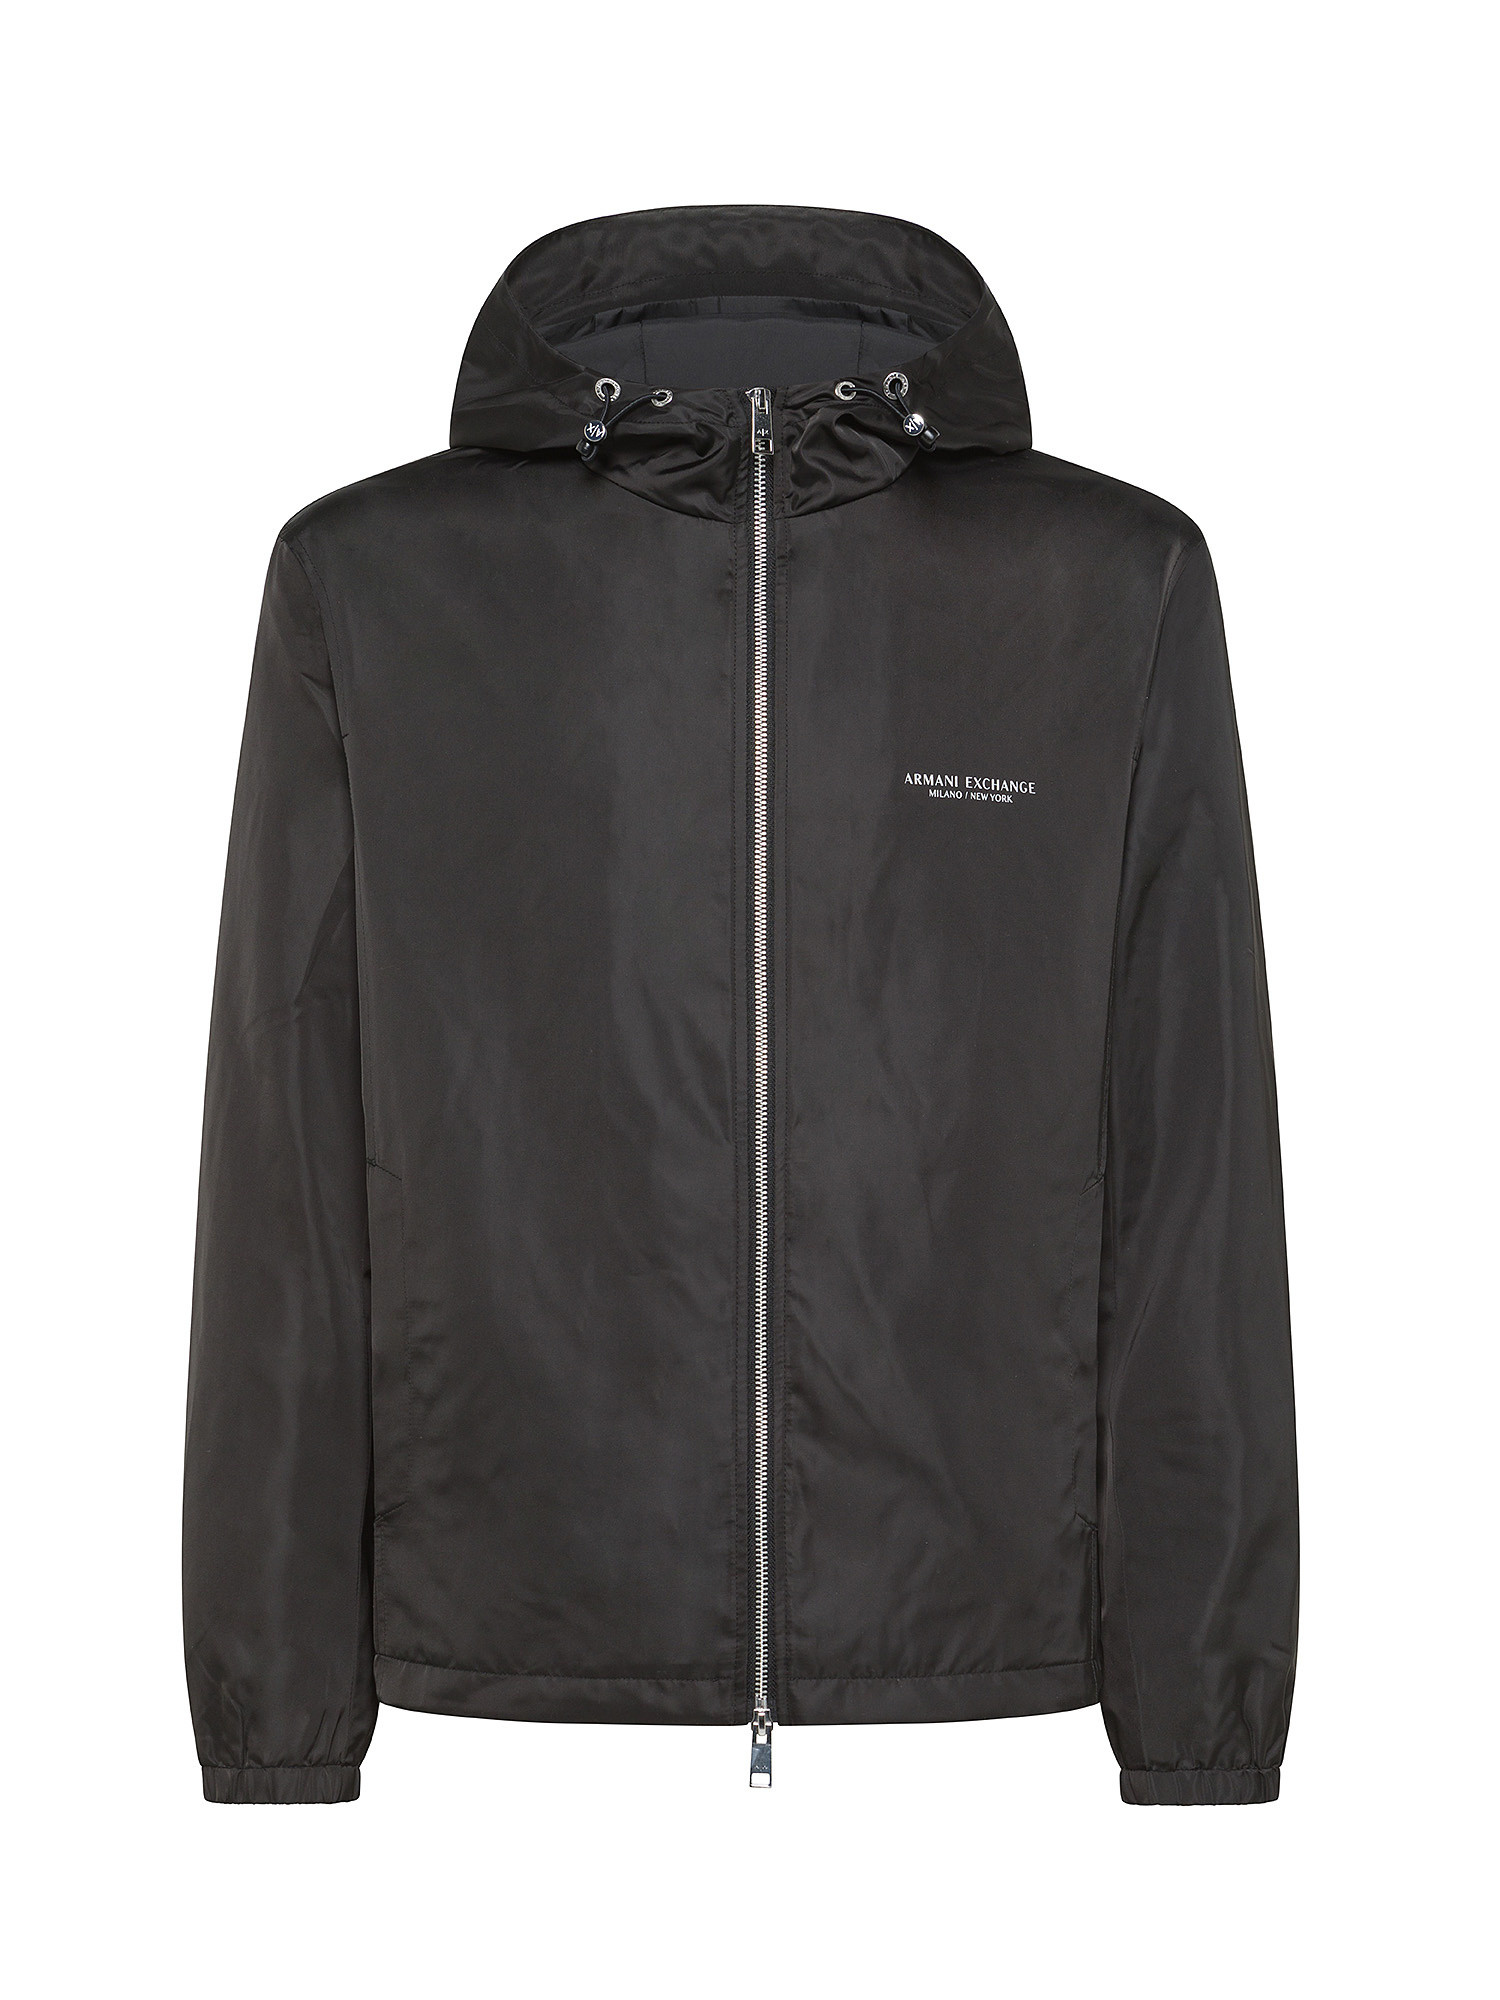 Armani Exchange - Jacket with hood and logo, Black, large image number 0